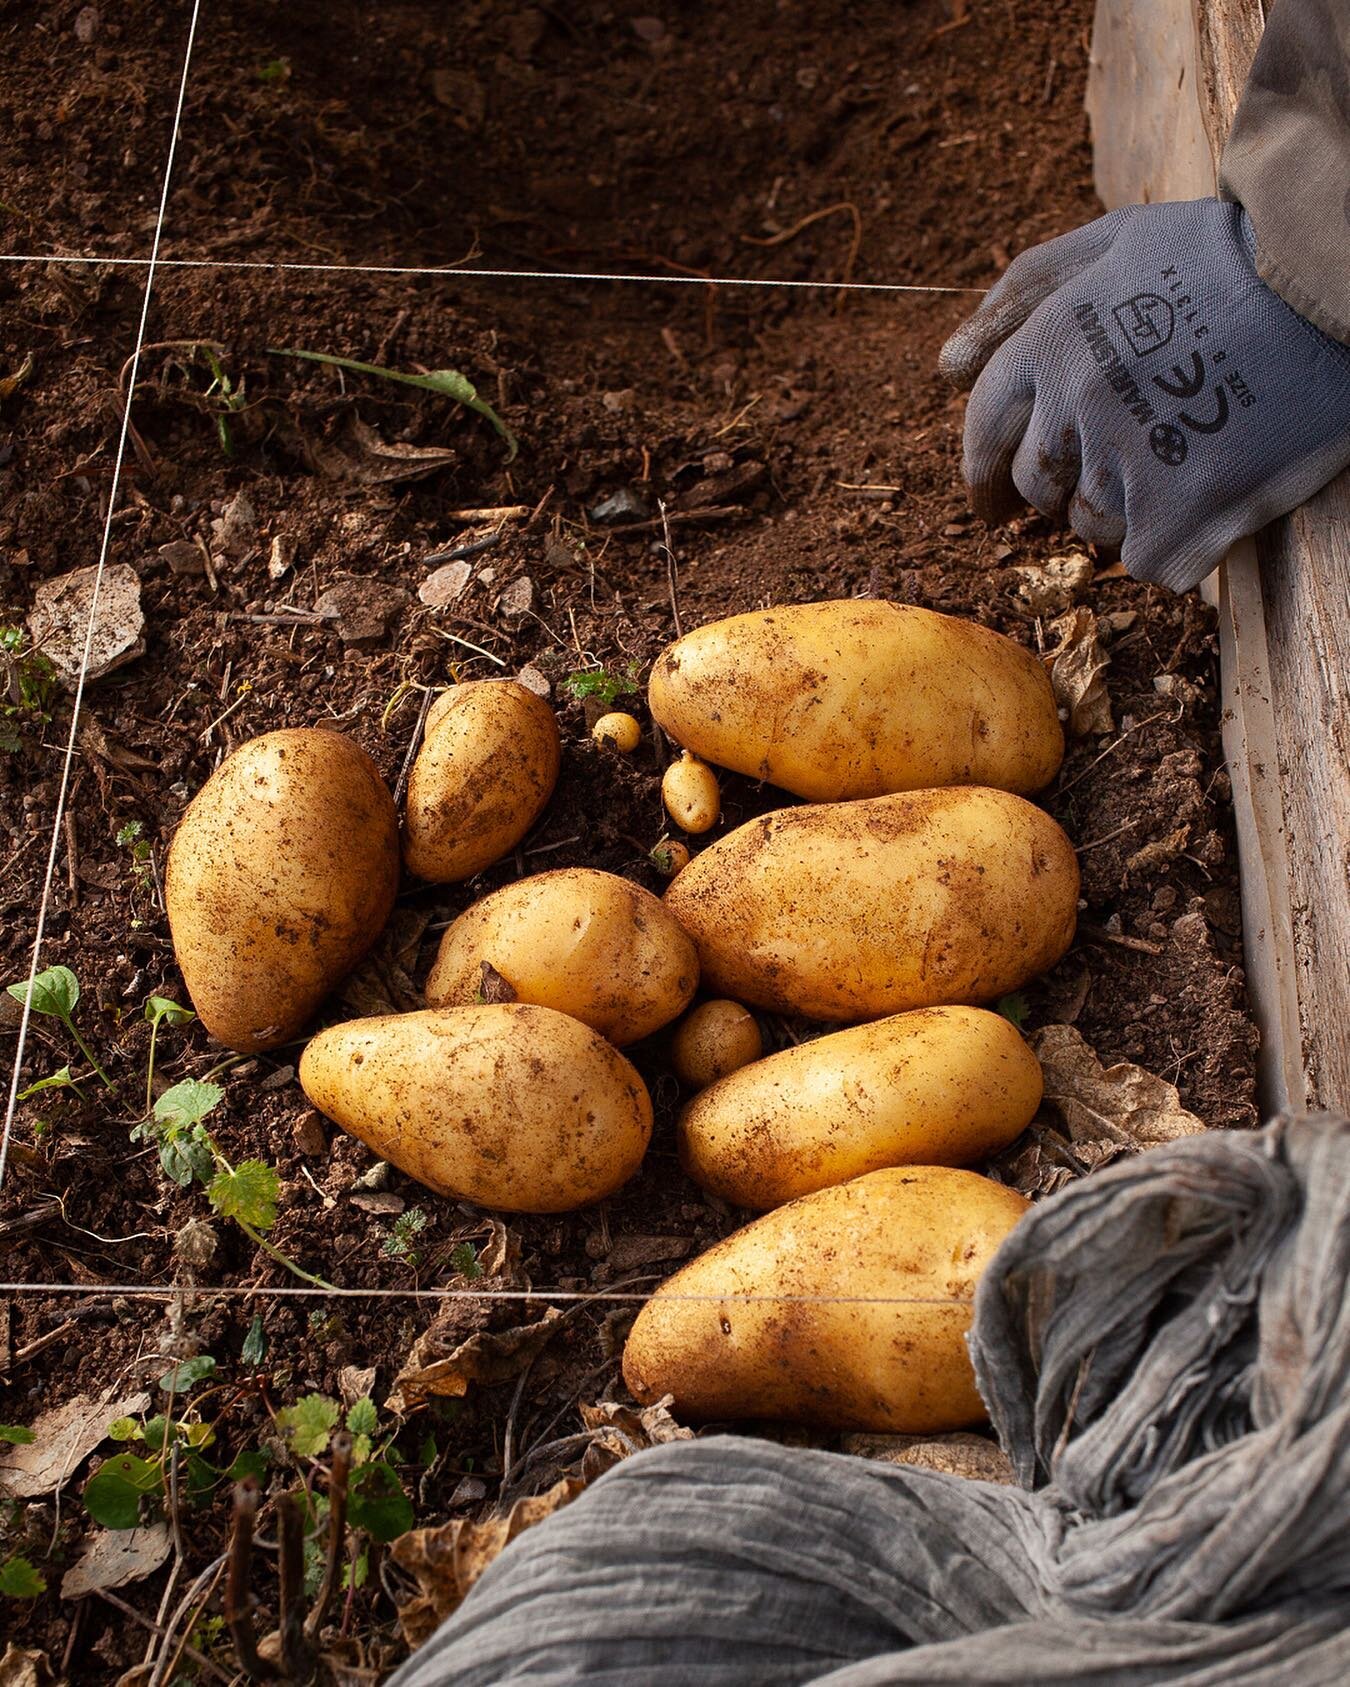 The Great Potato Harvest of #2021
.
#DevonLife
#DevonCoast
#DevonArtist